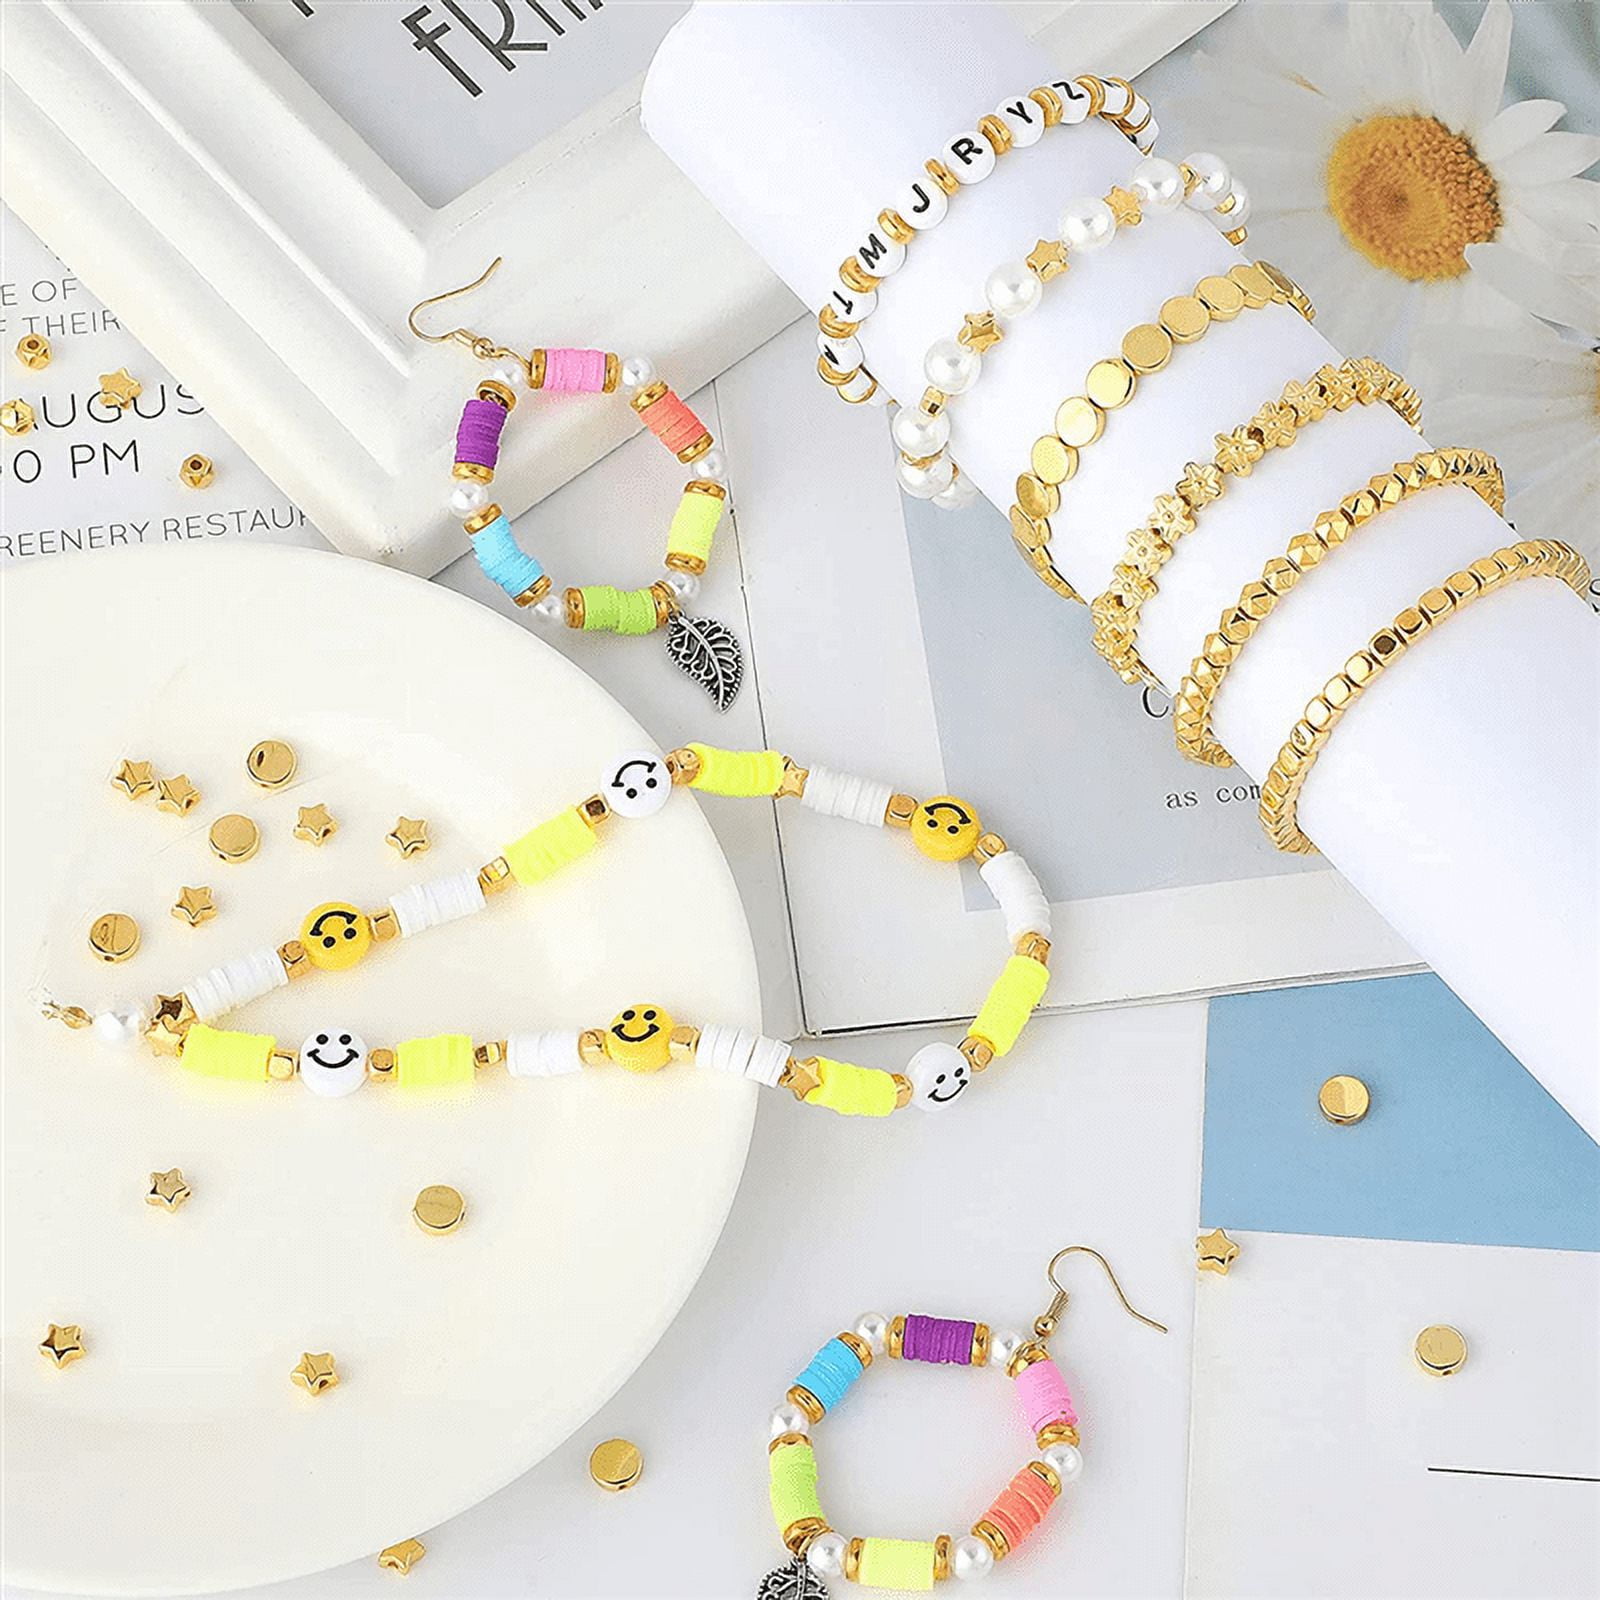 10PCS - HOT SALE Pure 14K Yellow Gold Beads / 3mm Lucky DIY Loose Beads  Pendant